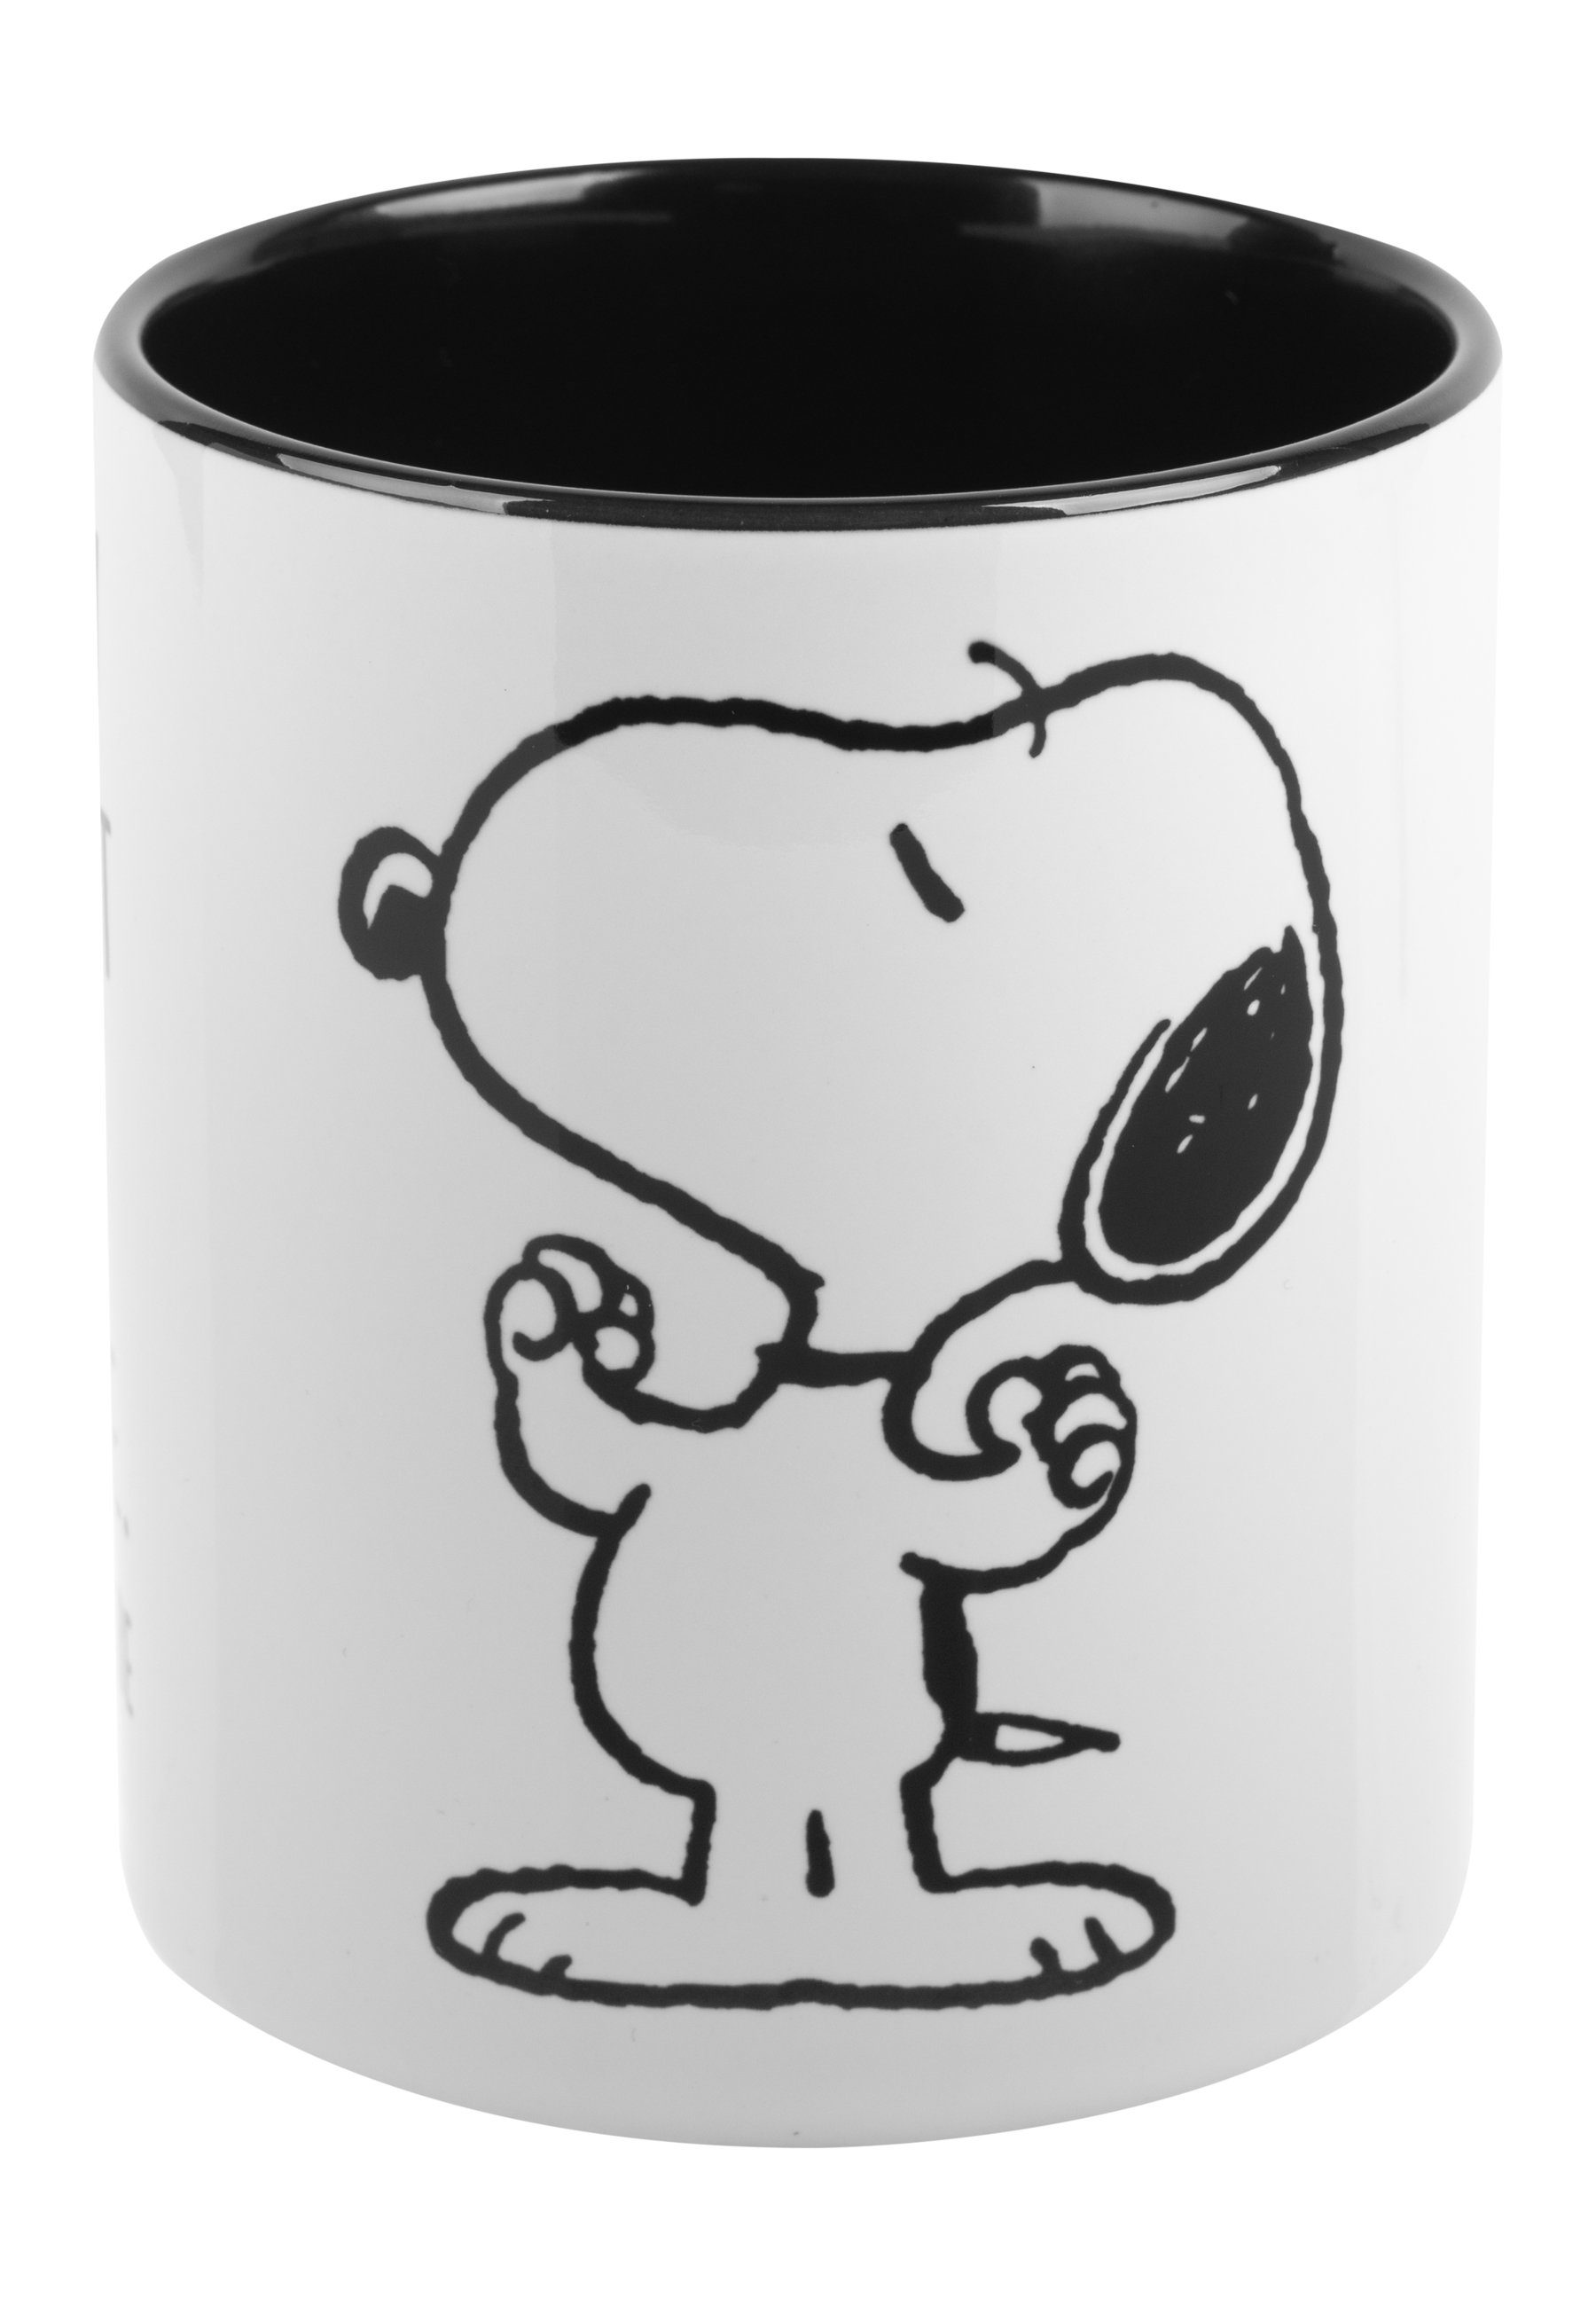 Keramik Labels® Peanuts Weiß Seele Schwarz die ml, Lesen The stärkt United Snoopy 320 Tasse Tasse